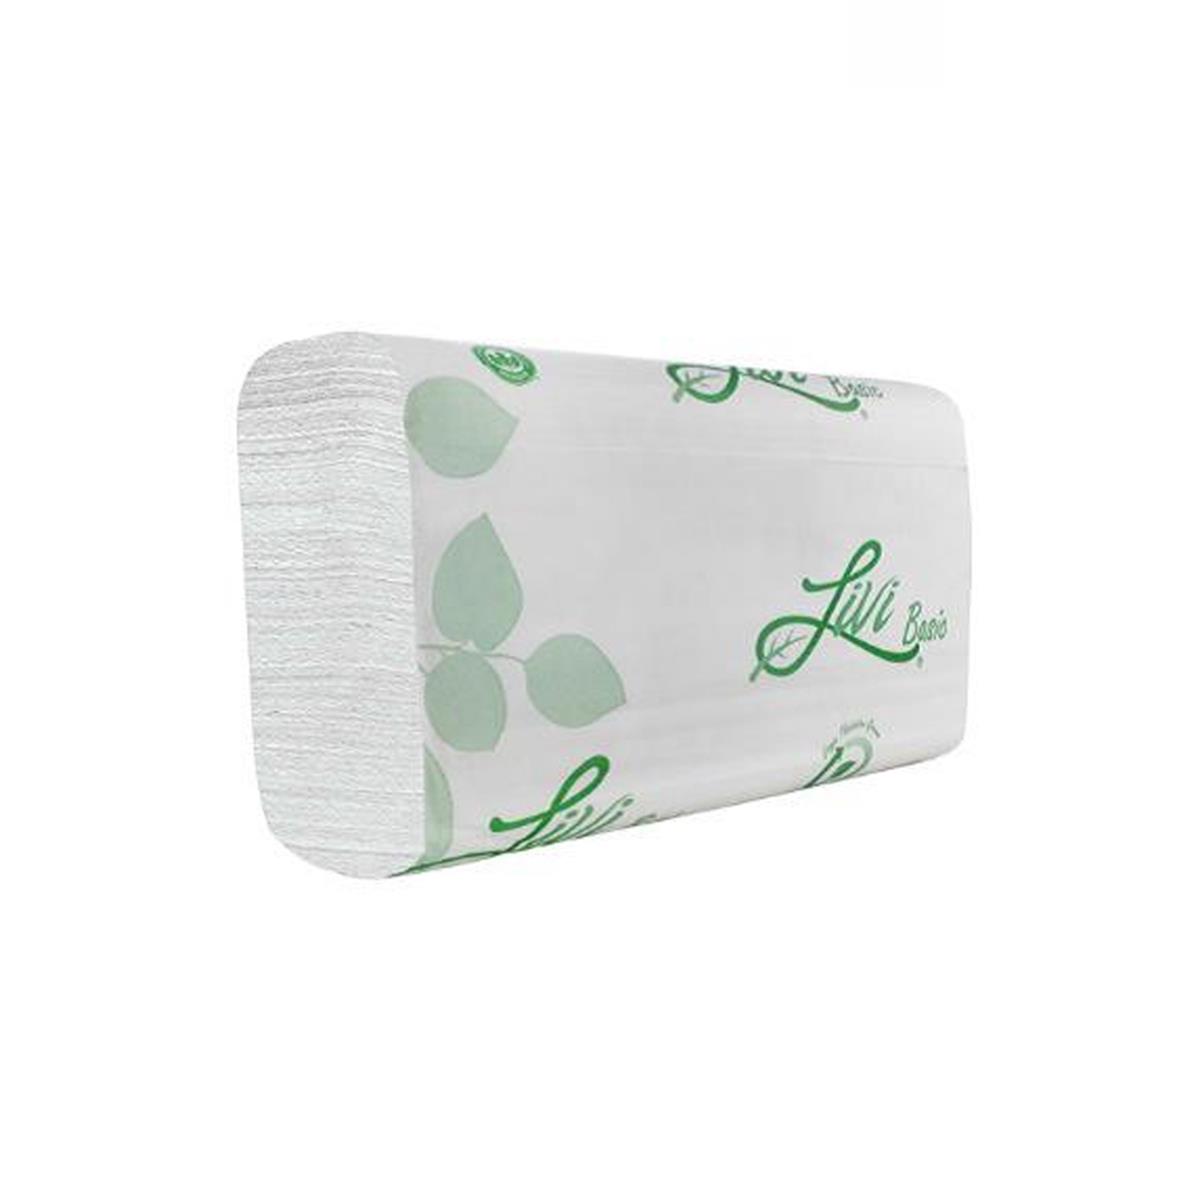 43513 Pe 9 X 9.5 In. White 1ply Livi Multi-fold Paper Towel - Case Of 4000